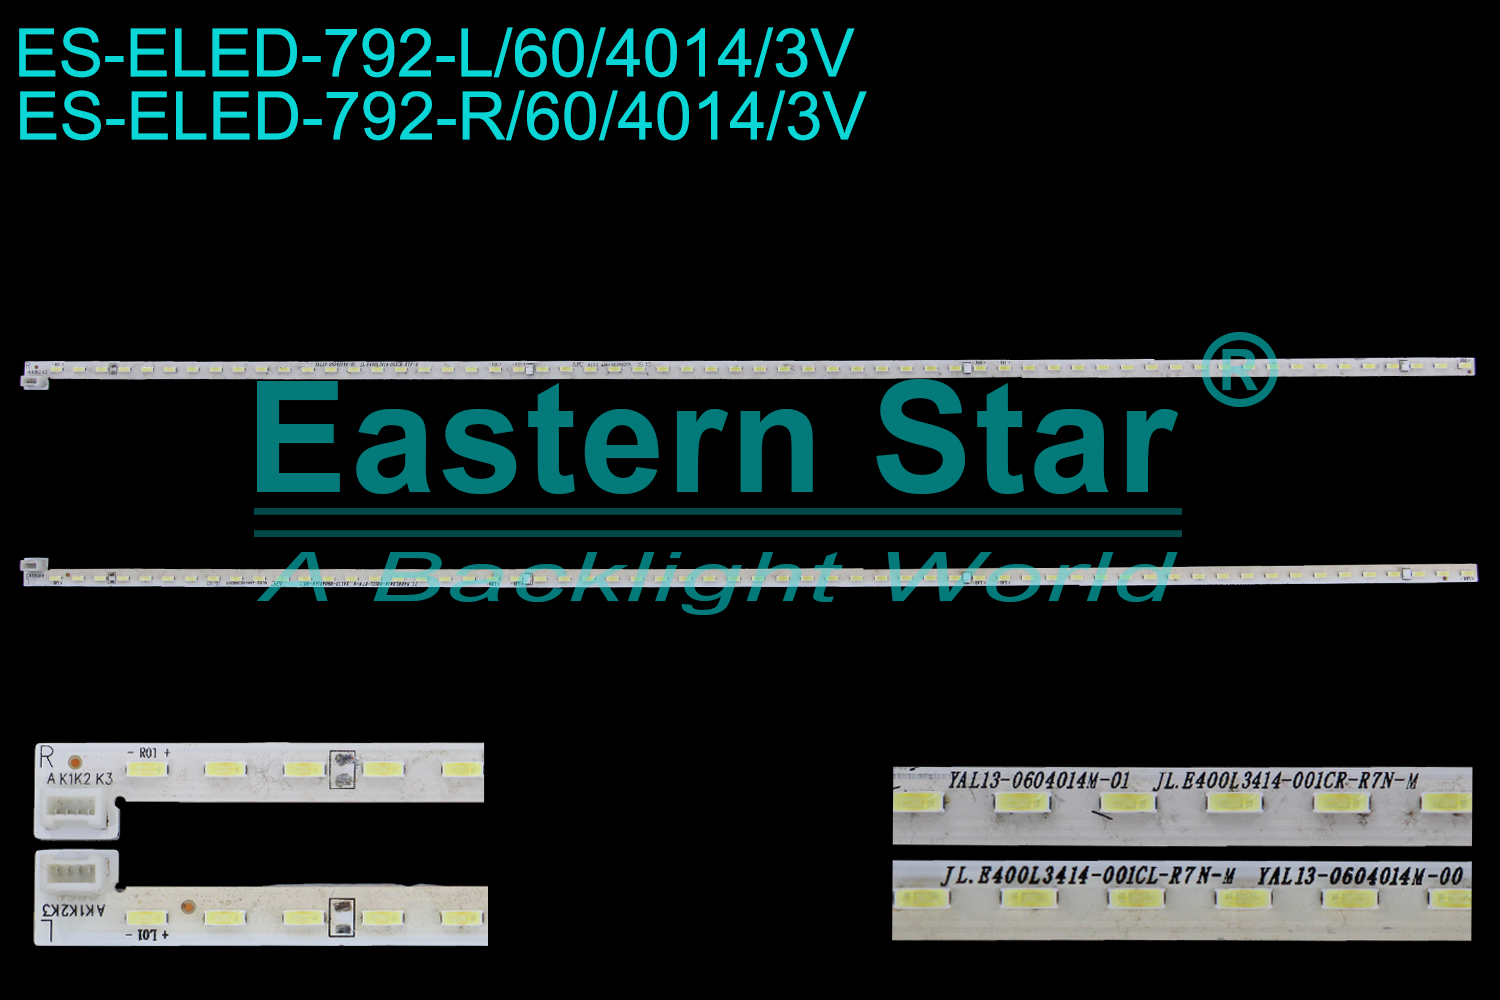 ES-ELED-792 ELED/EDGE TV backlight use for 40'' L:JL.E400L3414-001CL-R7N-M YAL13-0604014M-00  R:JL.E400L3414-001CR-R7N-M YAL13-0604014M-01  LED STRIPS(2)